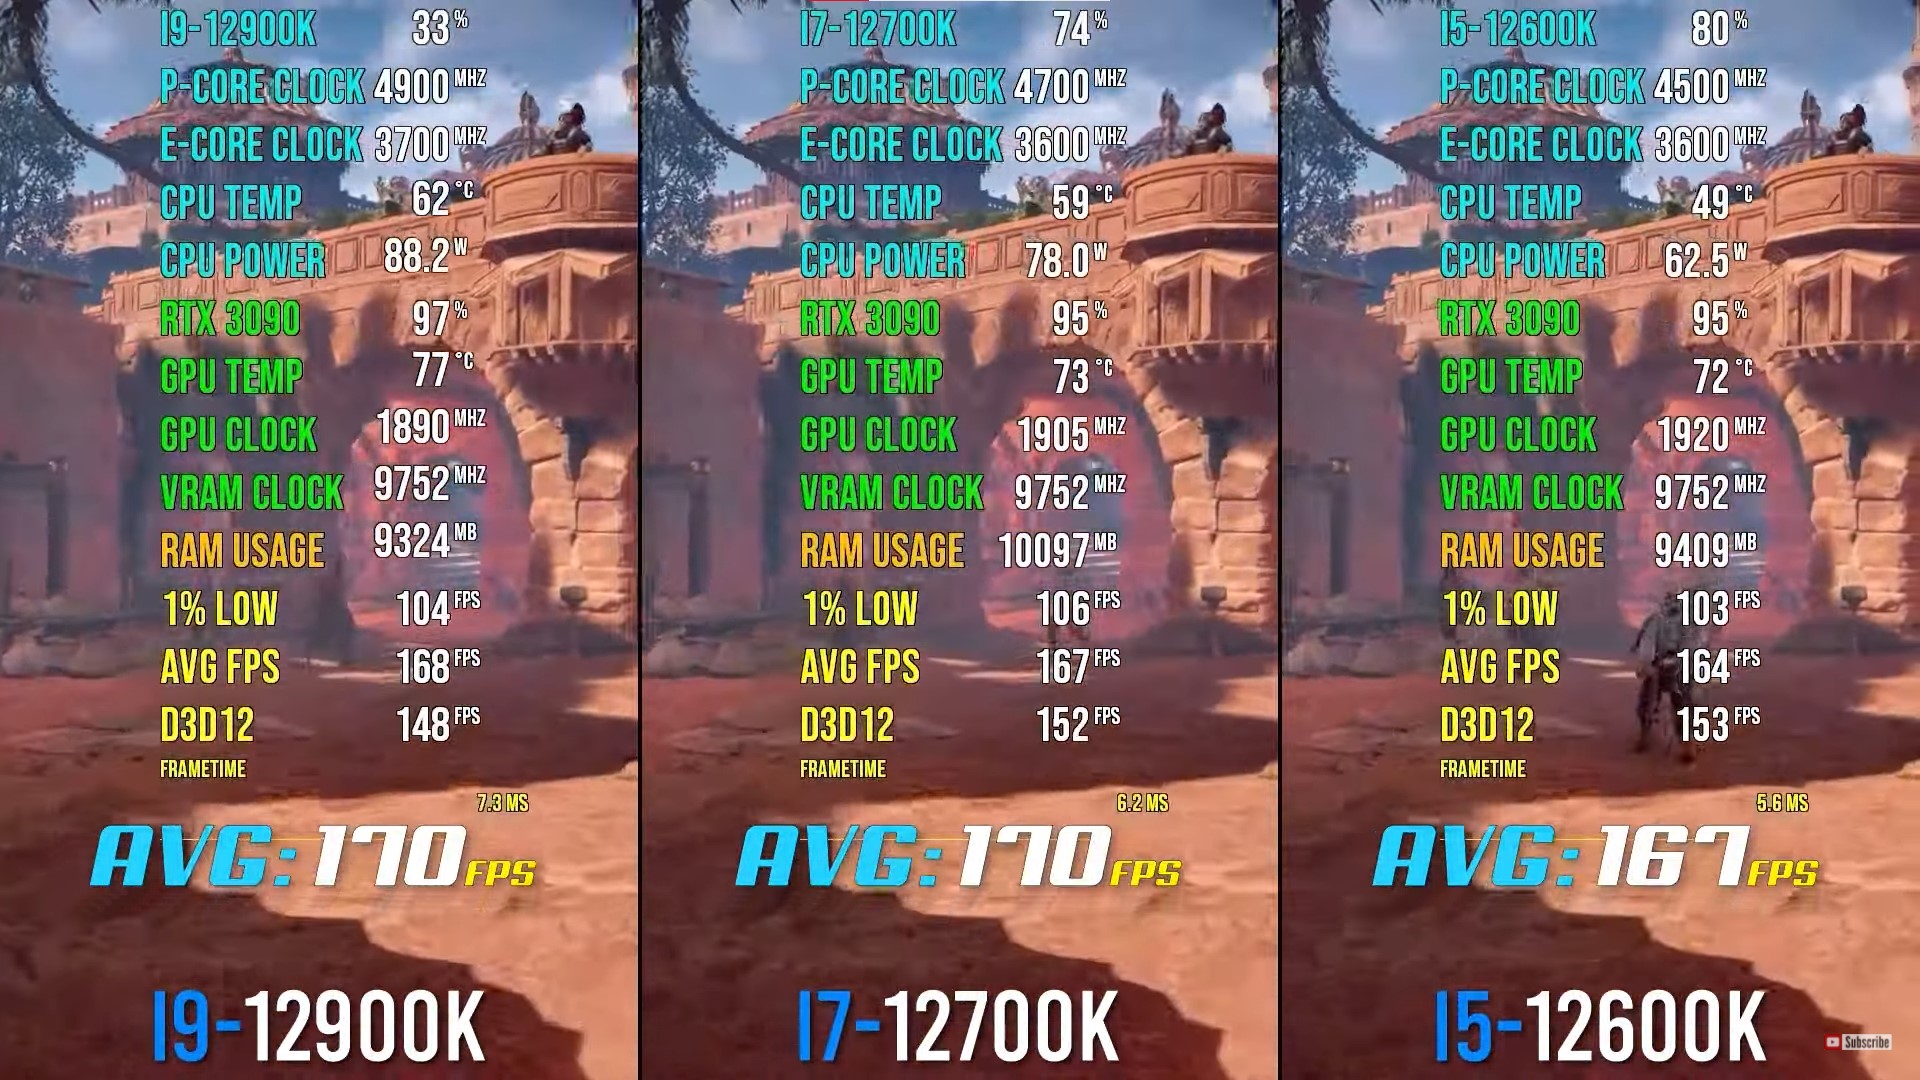 Horizon Zero Dawn performance with intel 12900k vs 12700k vs 12600k processors.